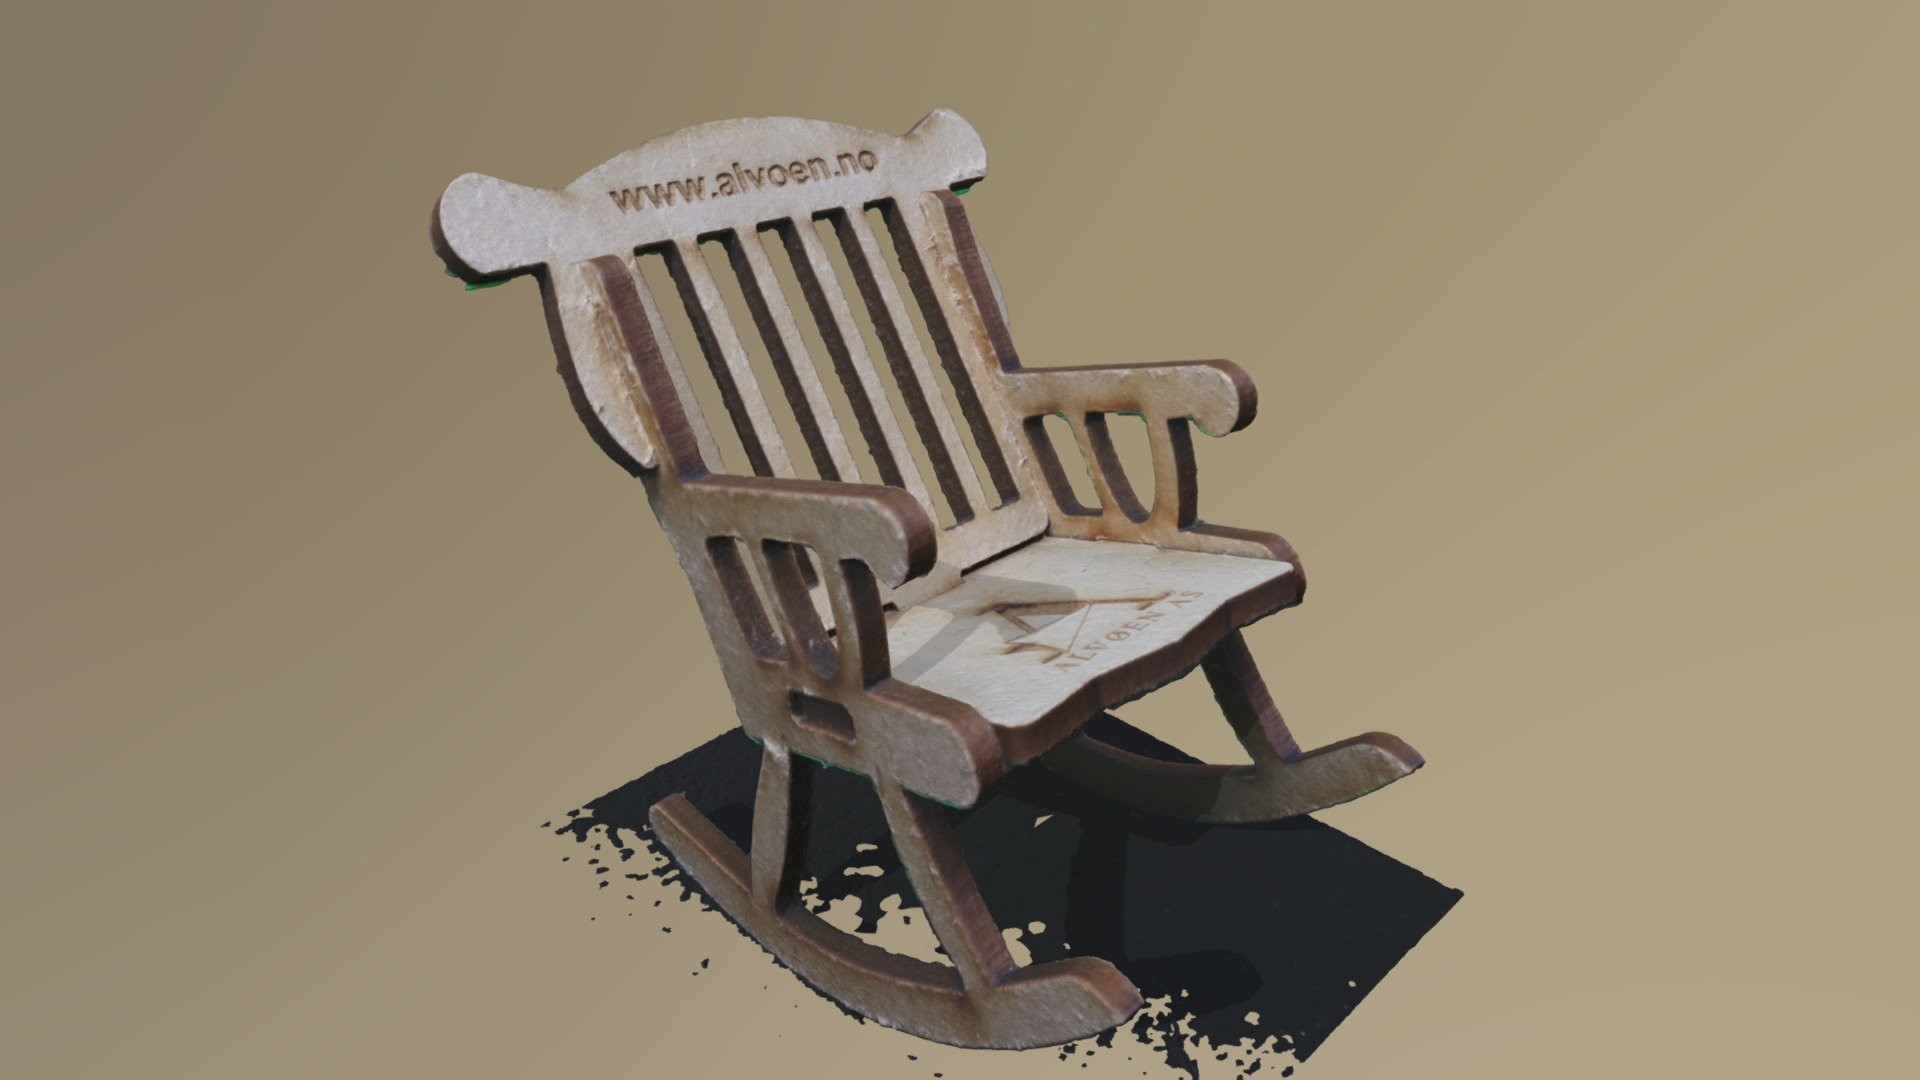 Mini chair v1